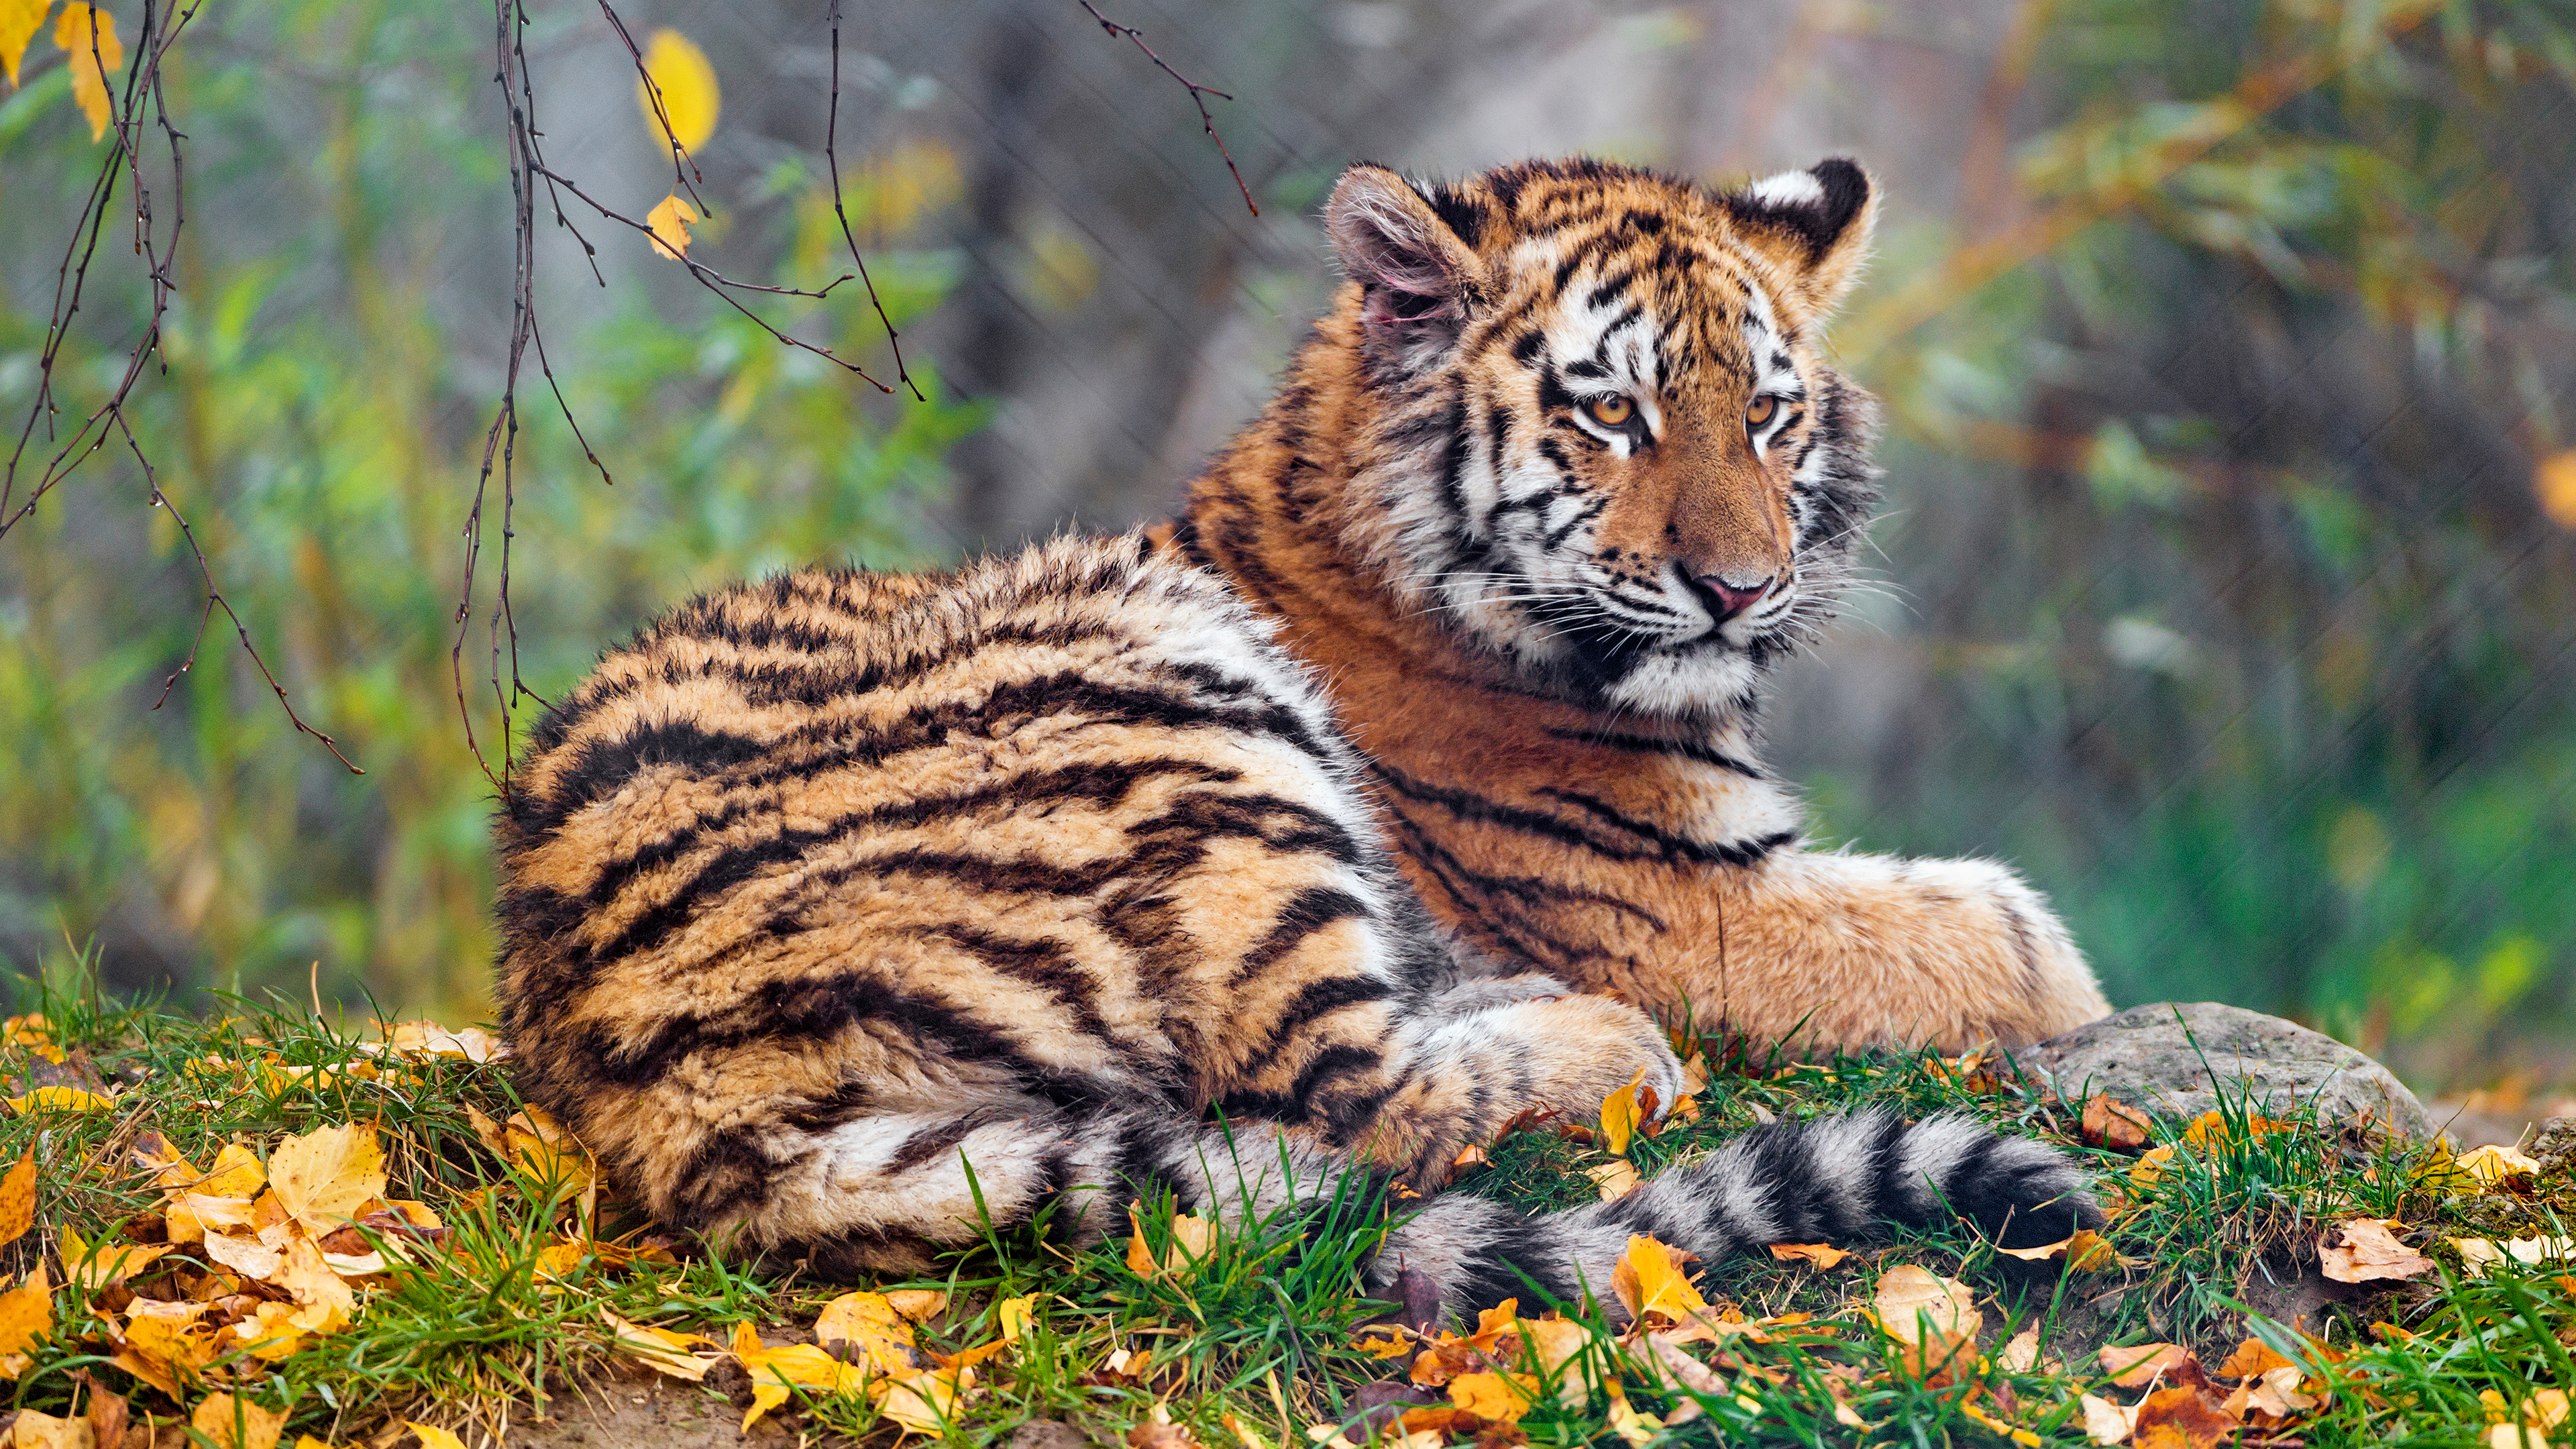 Cute tiger cub lying on autumn leaves - free photo